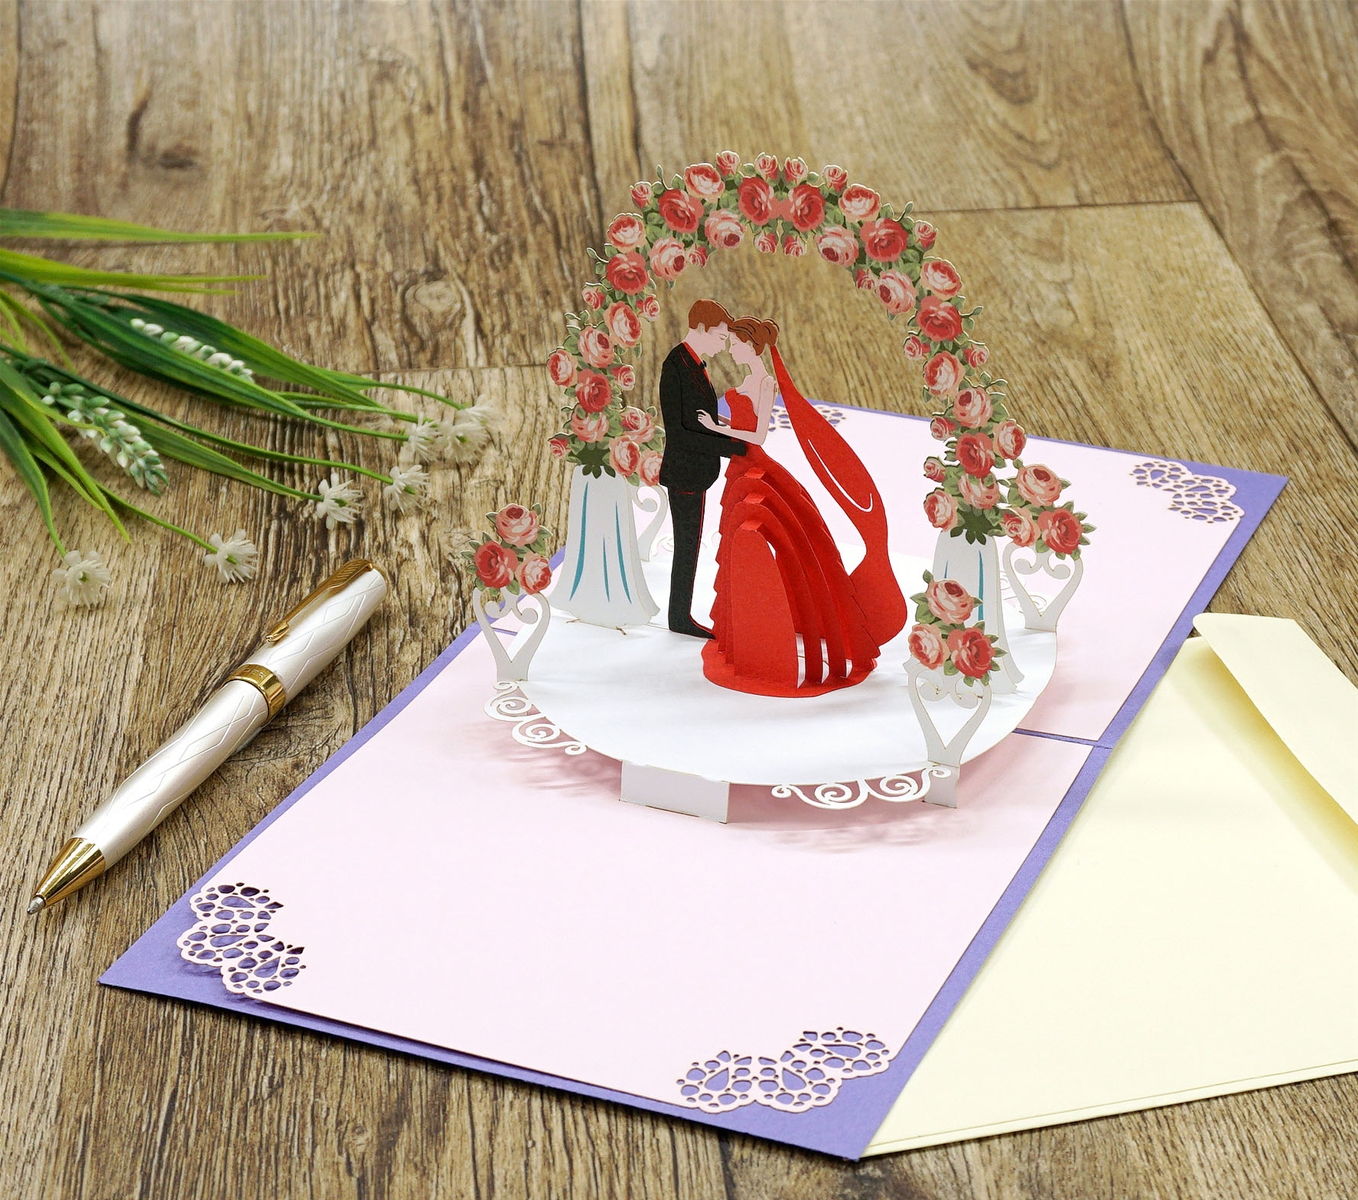 Popup Card WD23  Wedding Popup Cards  Handmadegifts Regarding Pop Up Wedding Card Template Free